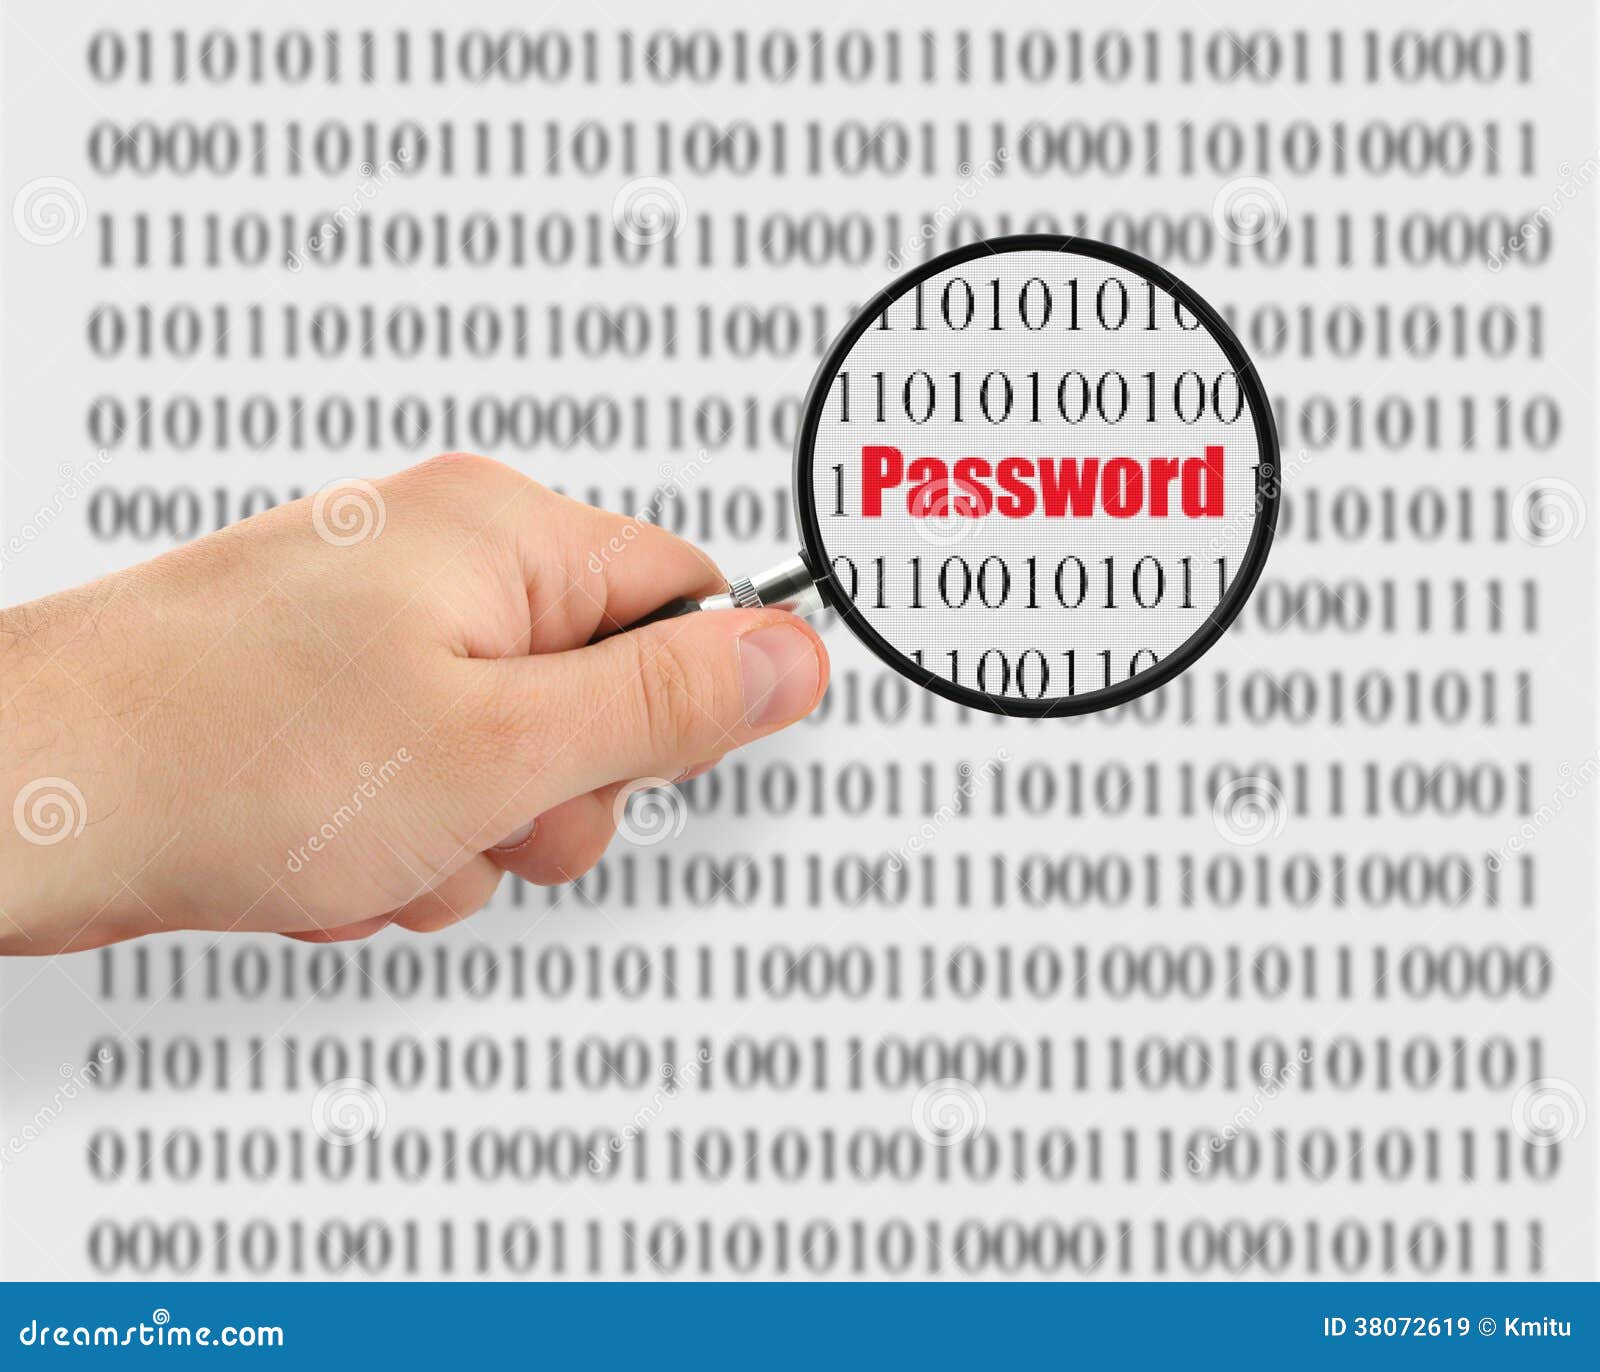 password cracking